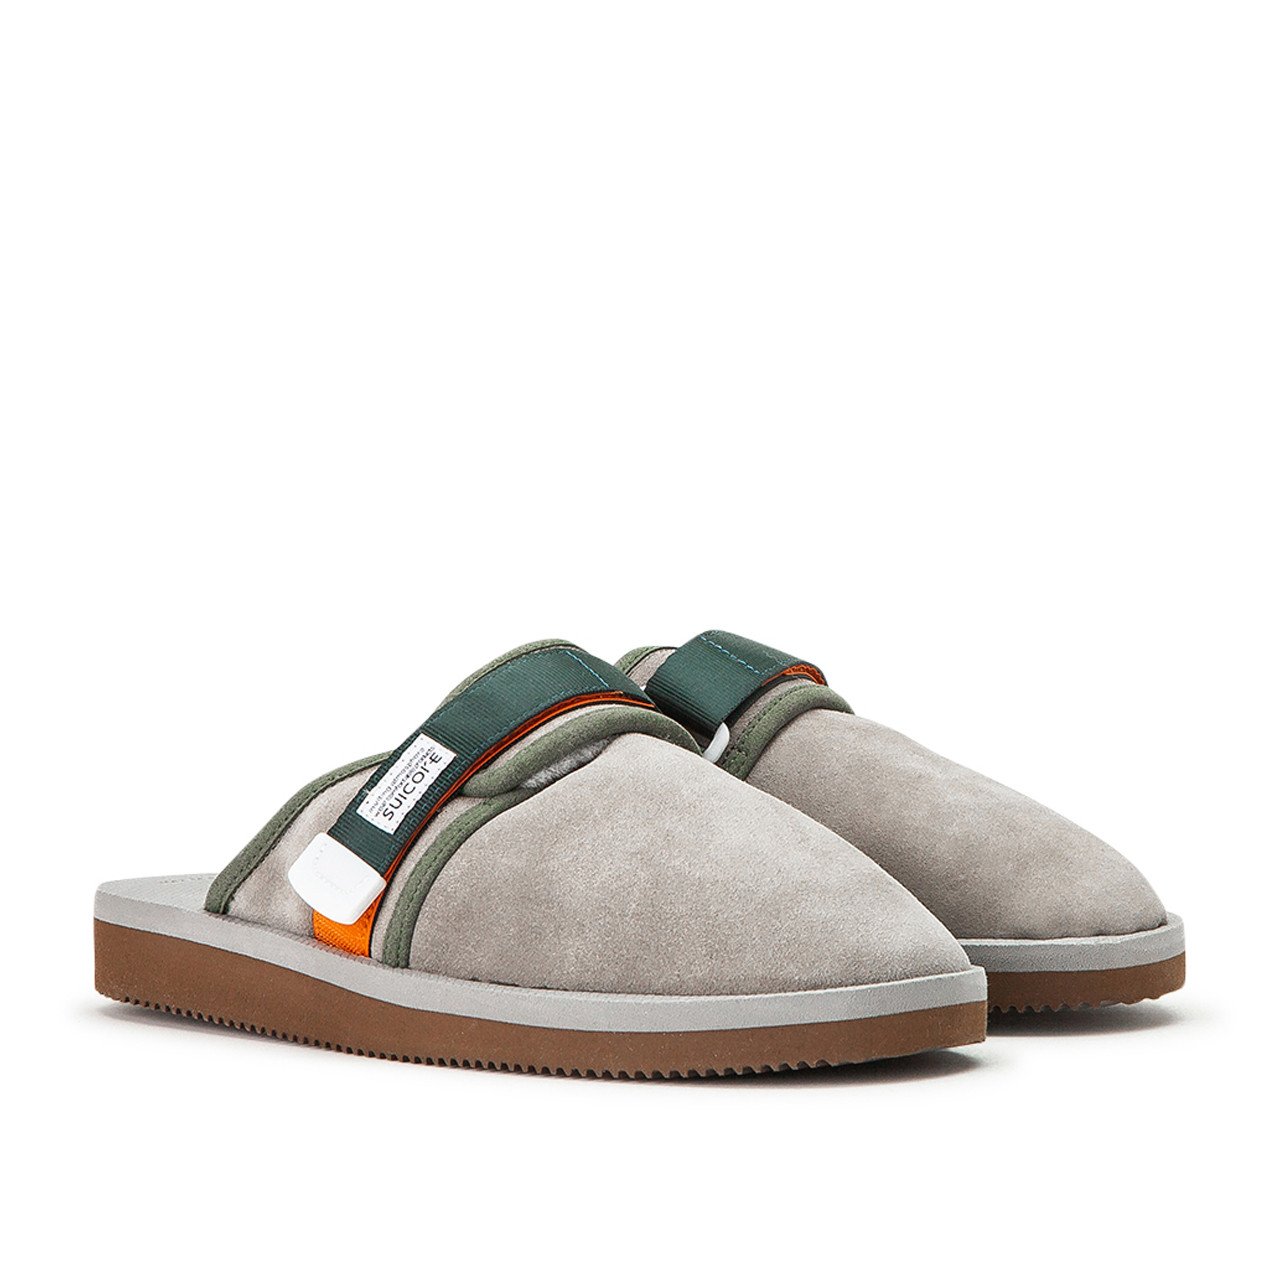 suicoke sandals zavo-mab (grey) - og-072mab-102 - a.plus - Image - 2